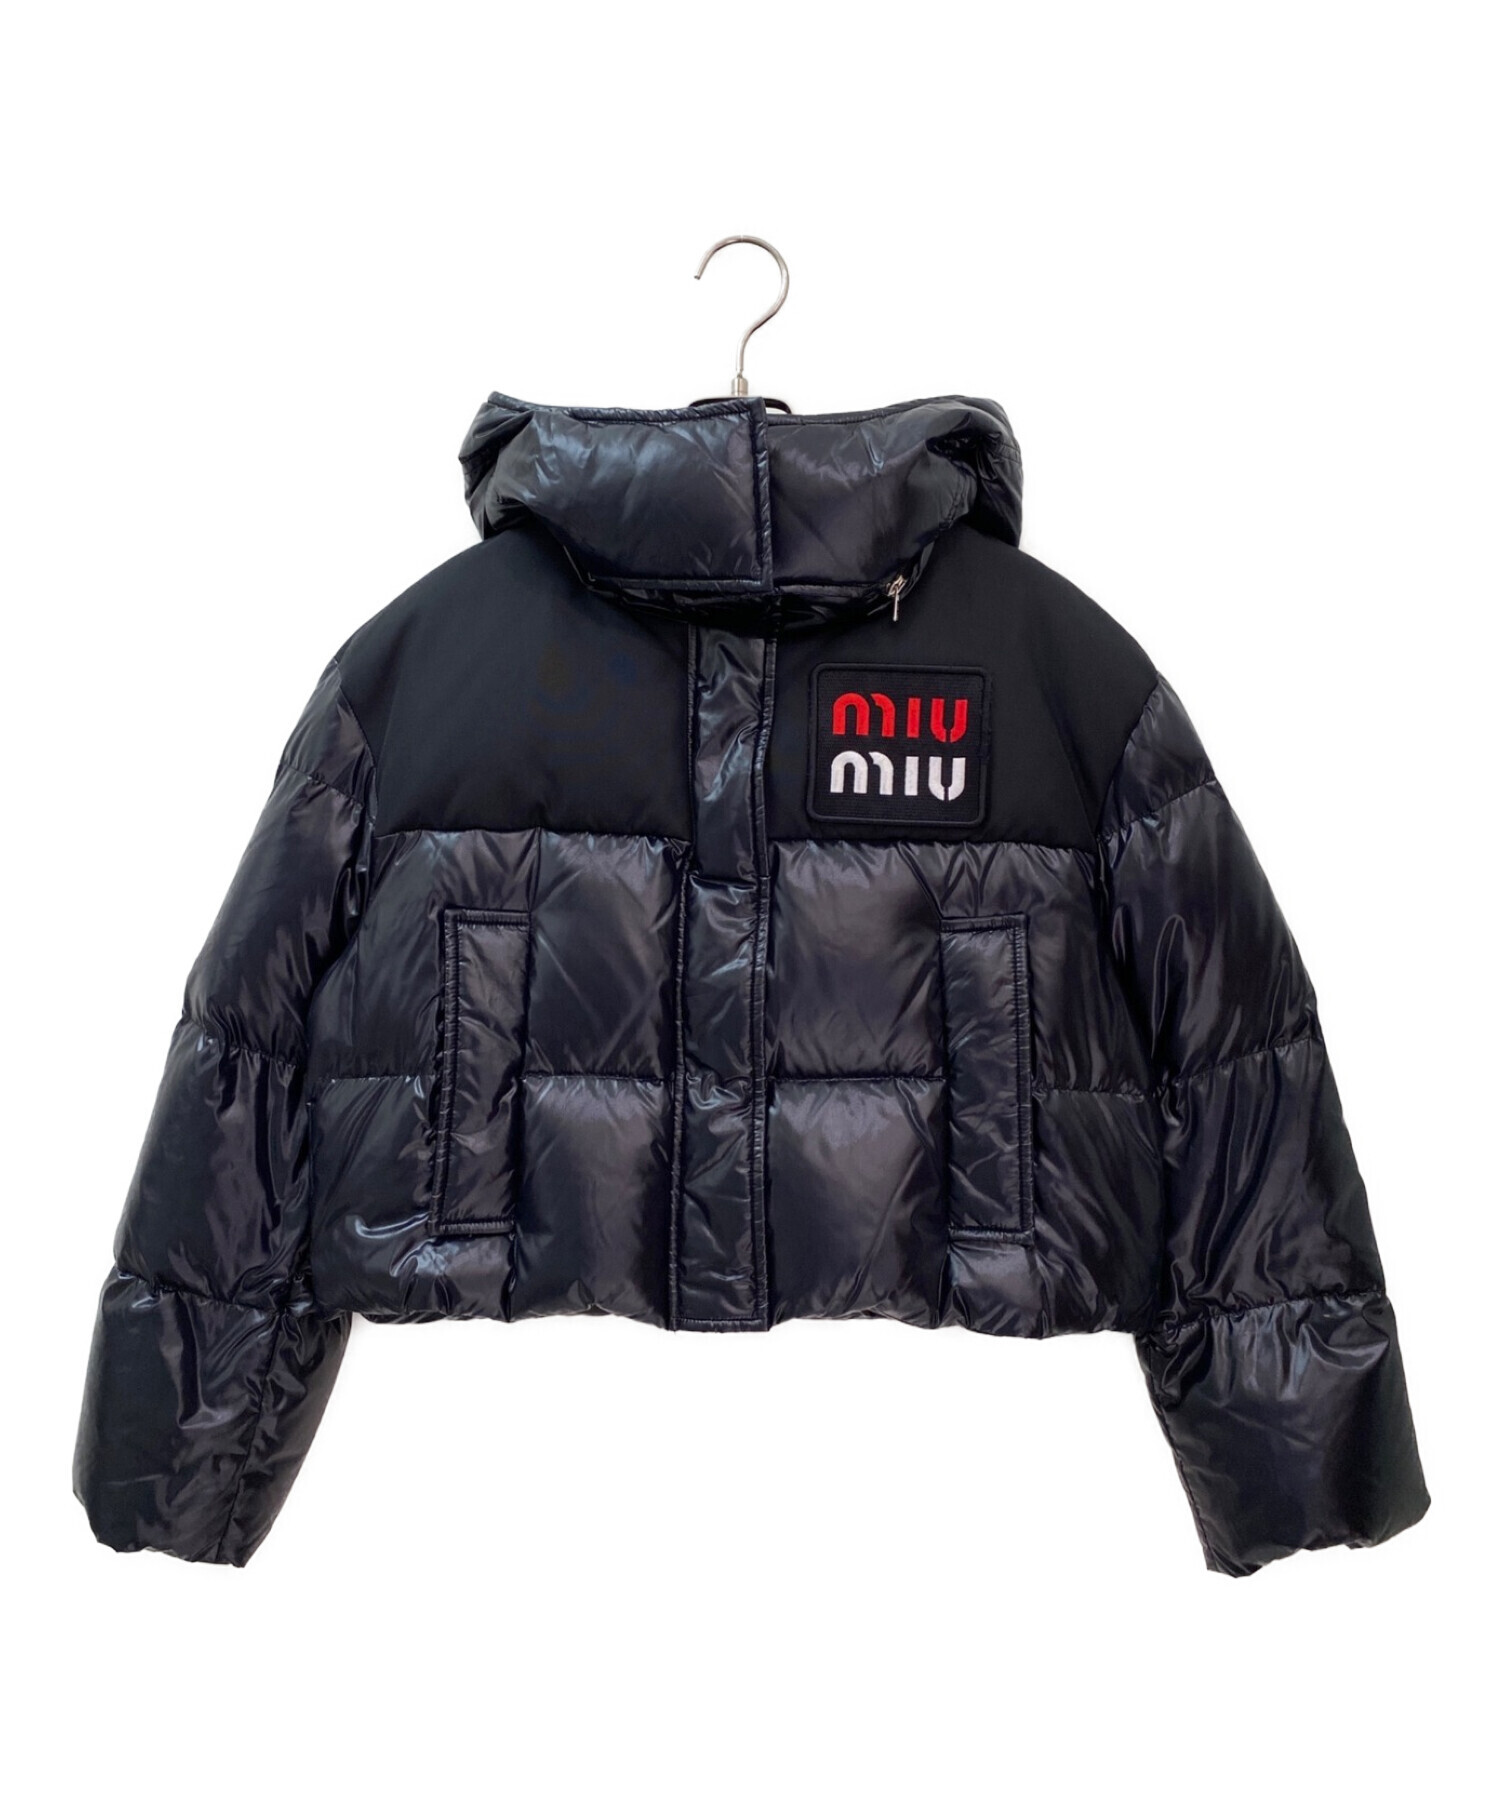 MIU MIU (ミュウミュウ) パファークロップドダウンジャケット ブラック サイズ:36